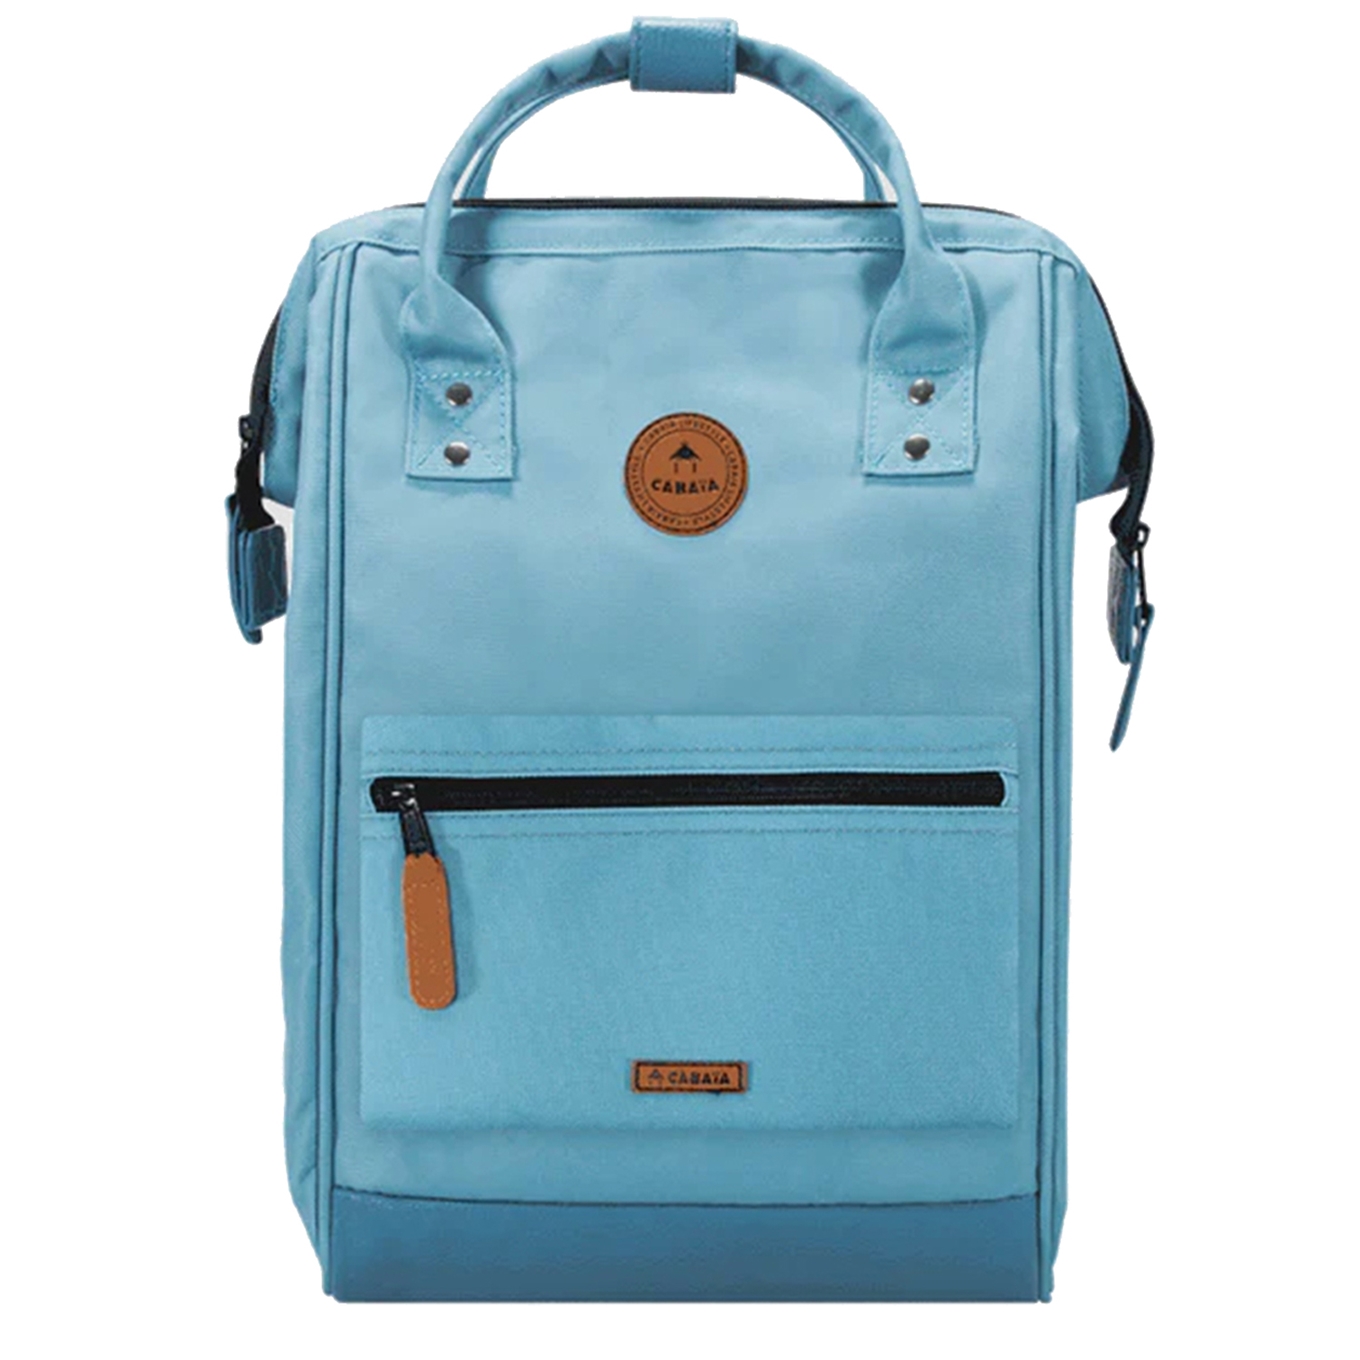 Cabaia Adventurer Medium Bag berne backpack